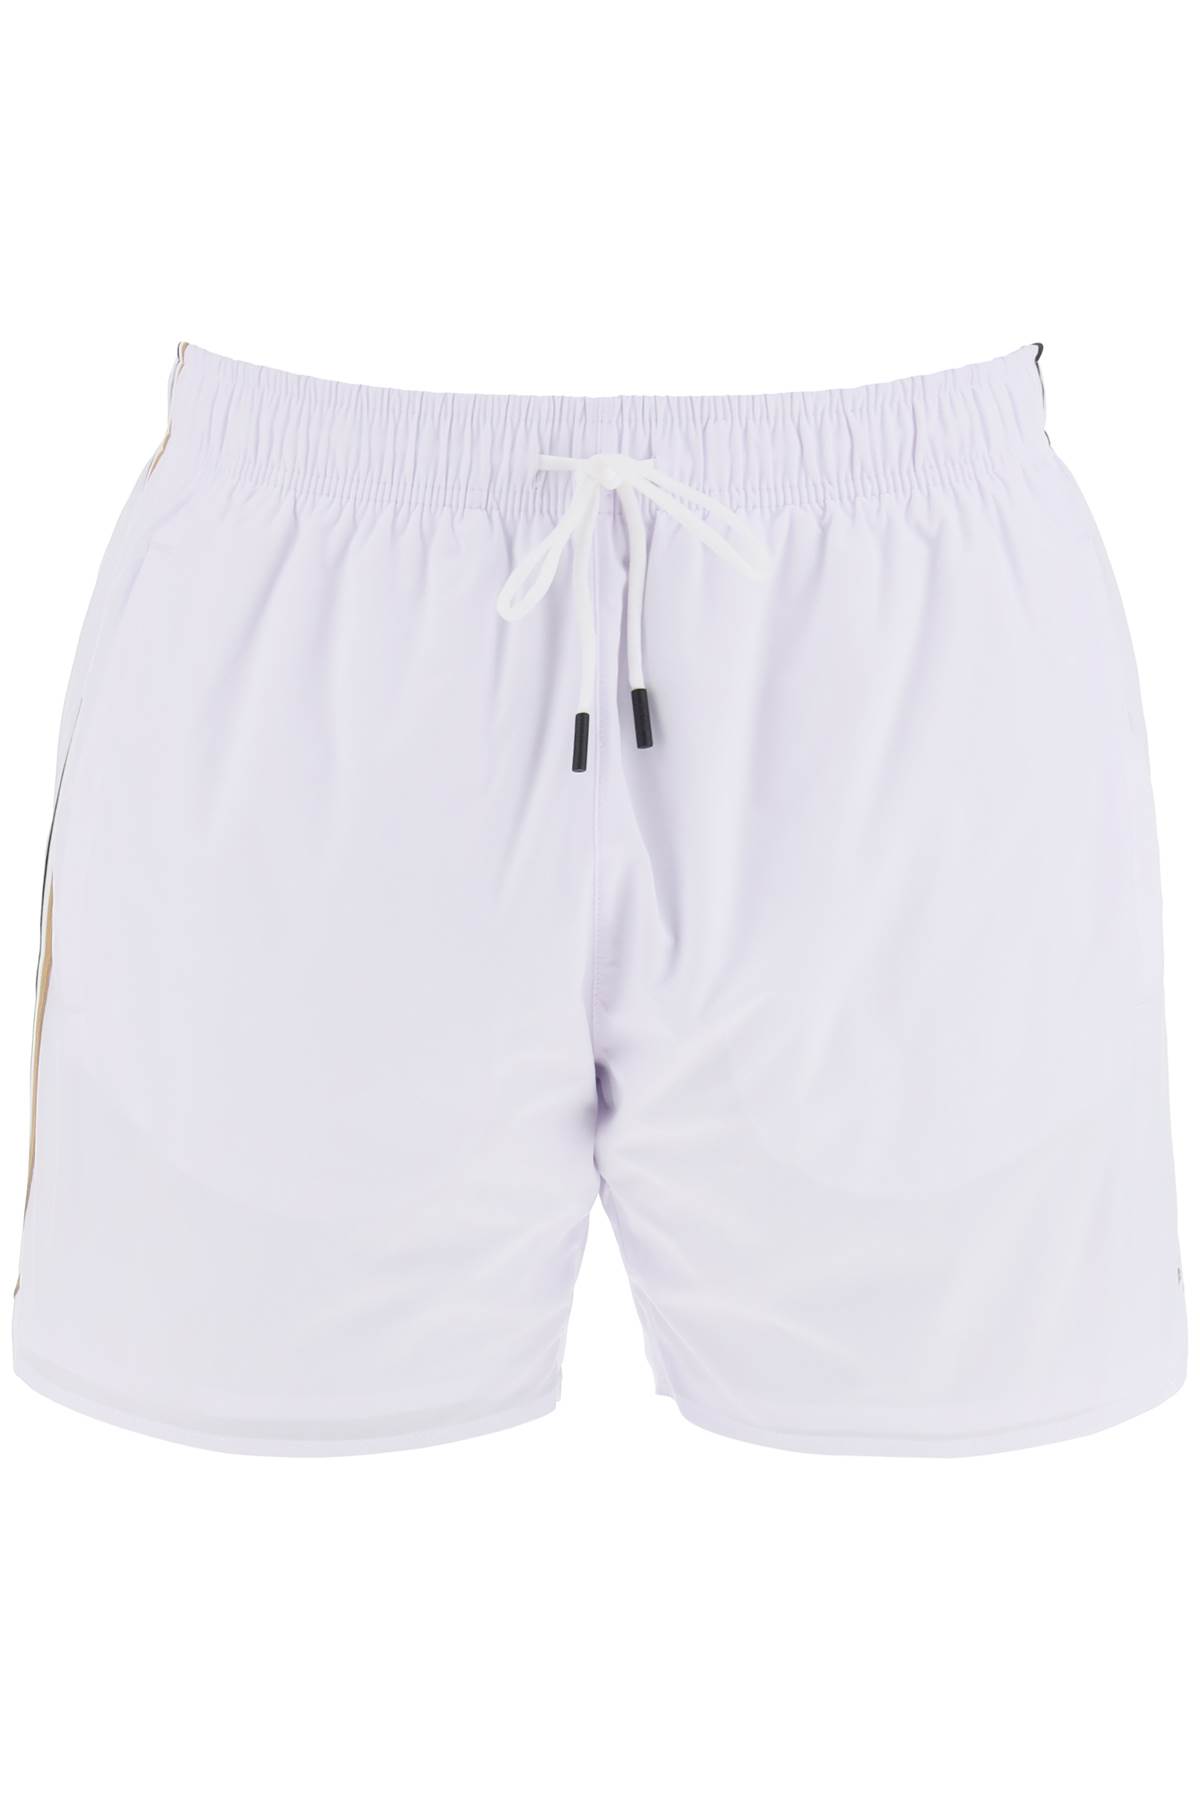 seaside Bermuda Shorts With Tr